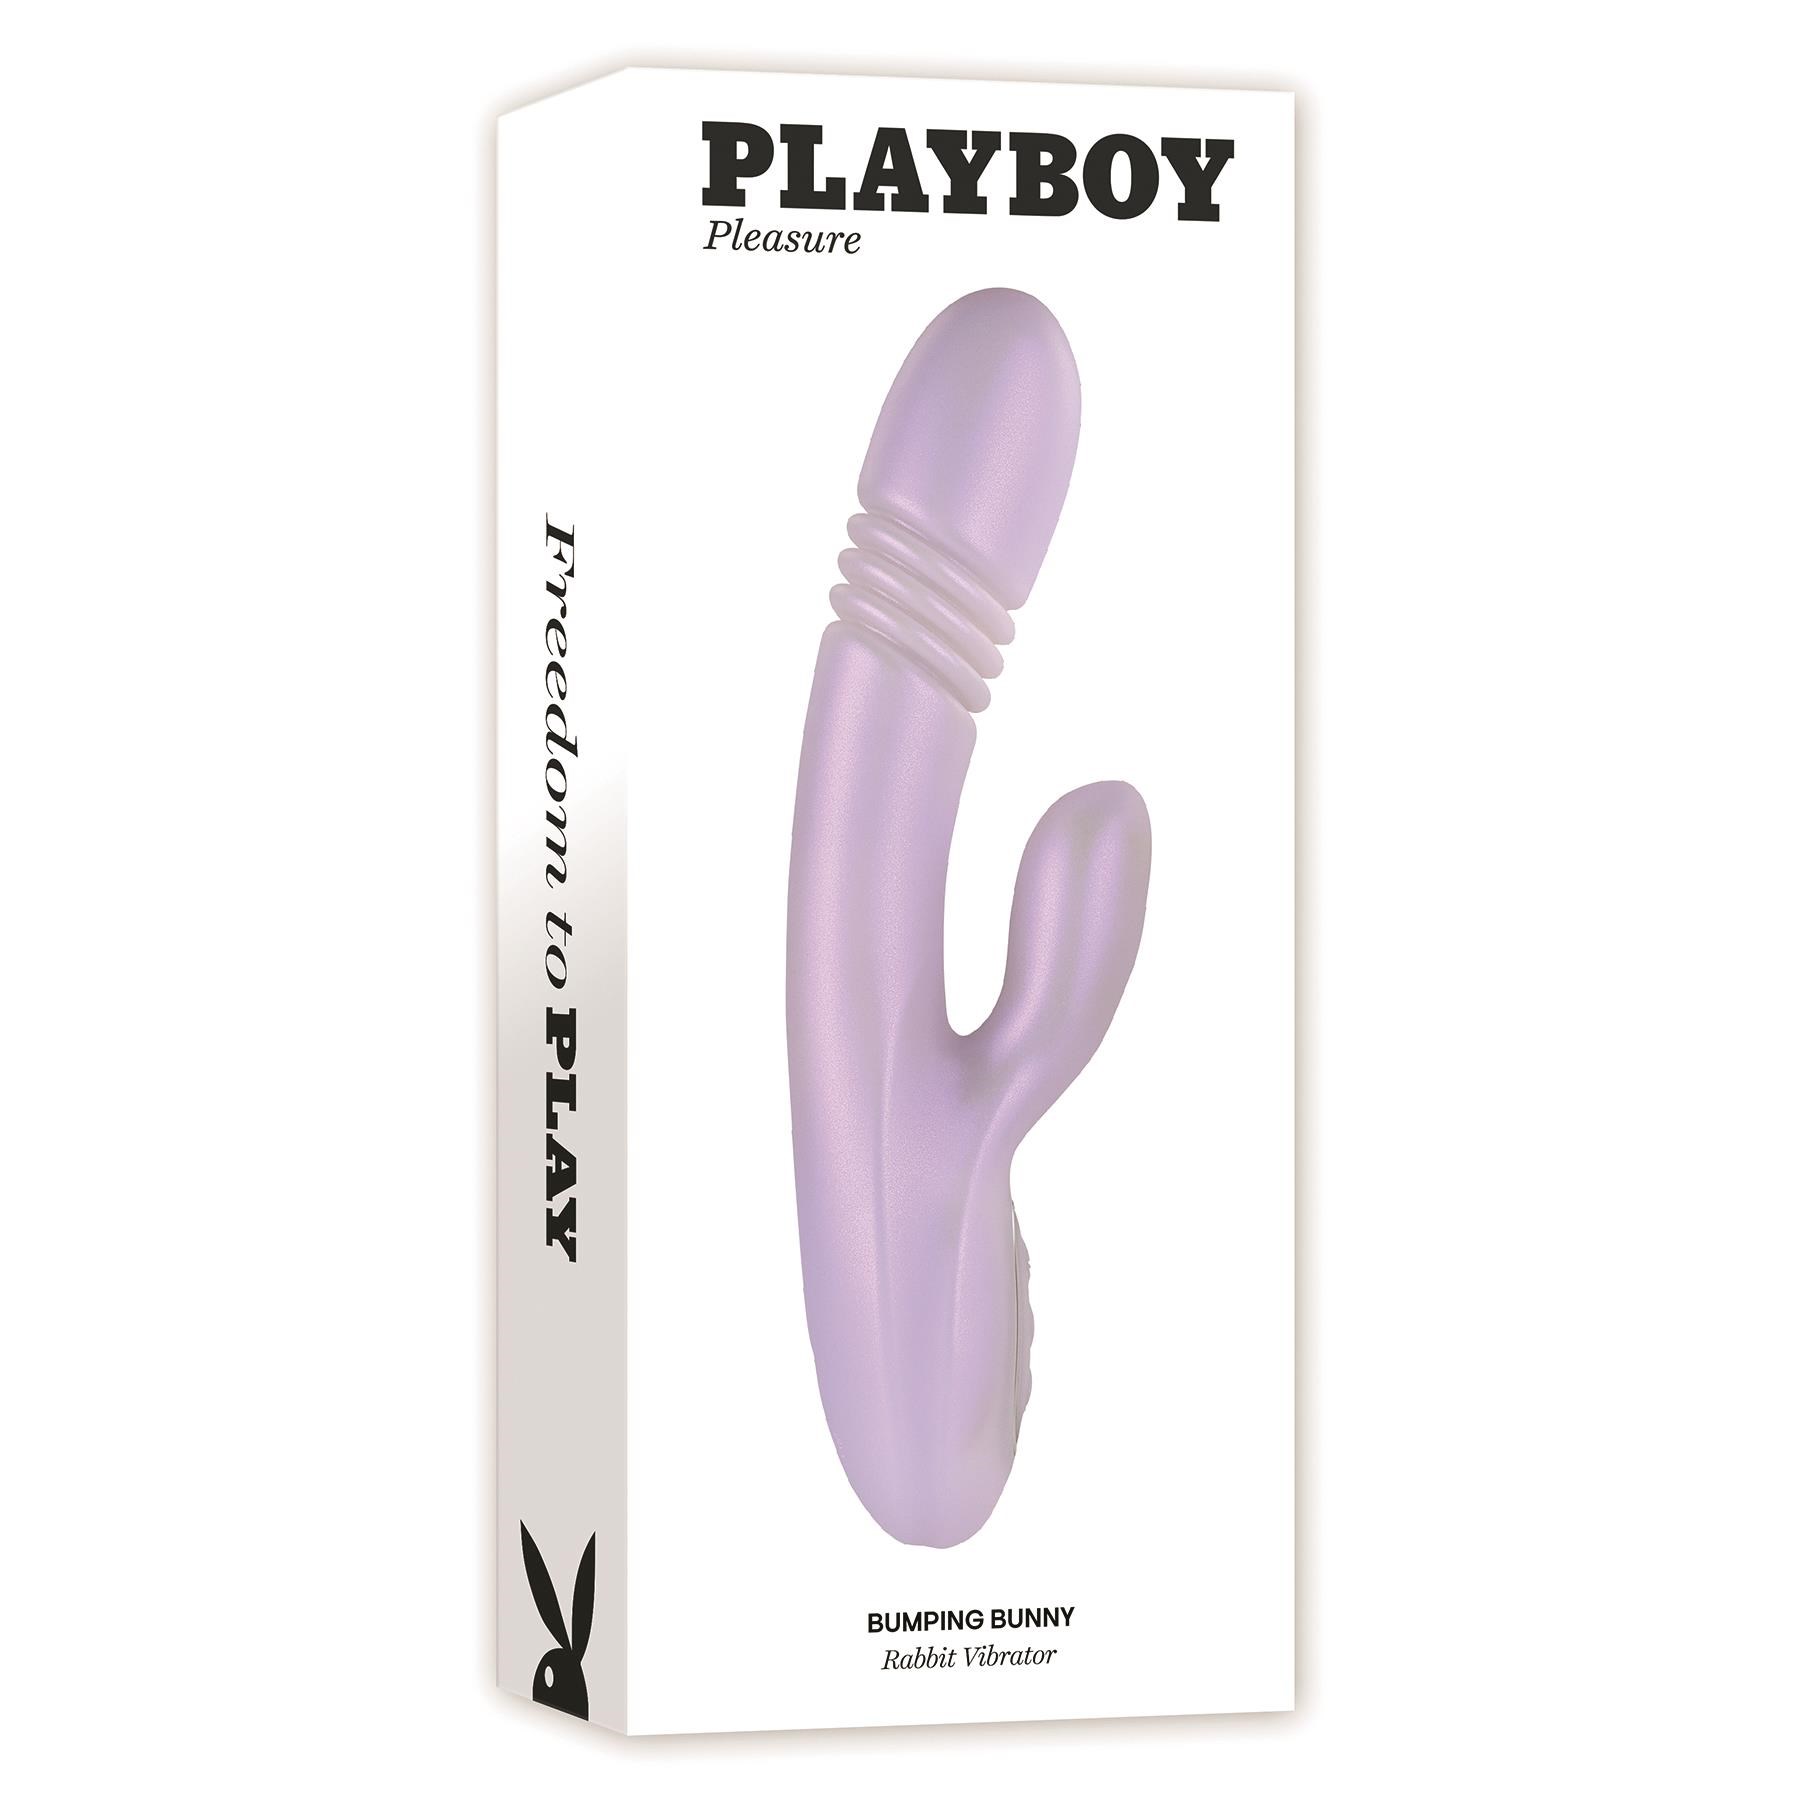 Playboy Pleasure Bumping Bunny Vibrator - Packaging